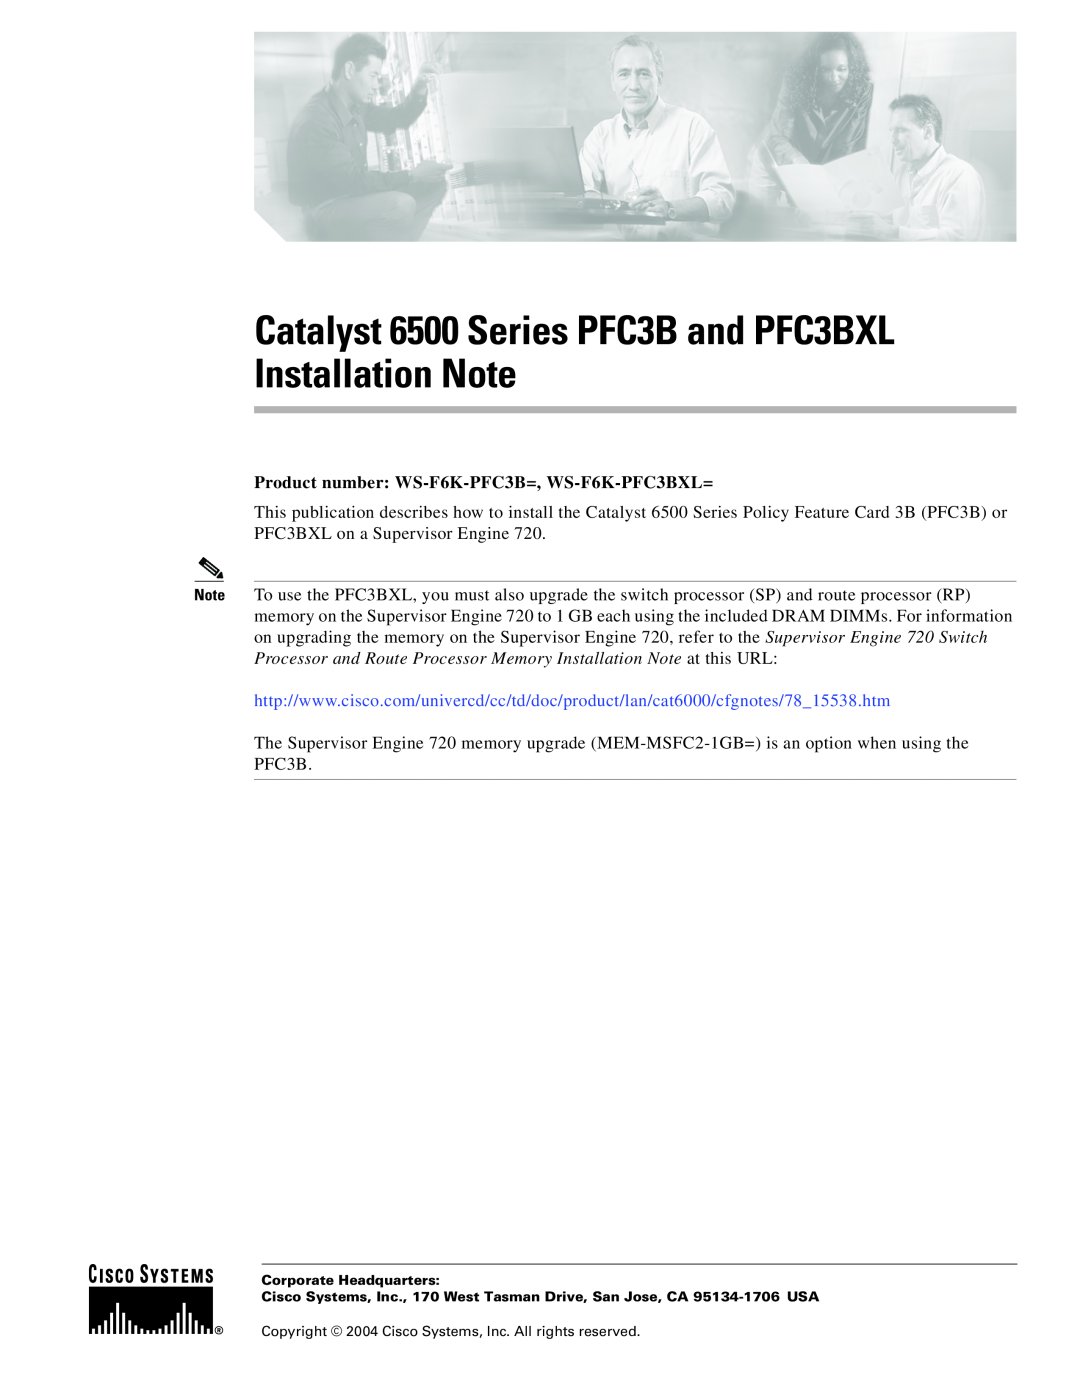 Cisco Systems WS-F6K-PFC3B=, WS-F6K-PFC3BXL= manual Catalyst 6500 Series PFC3B and PFC3BXL Installation Note 